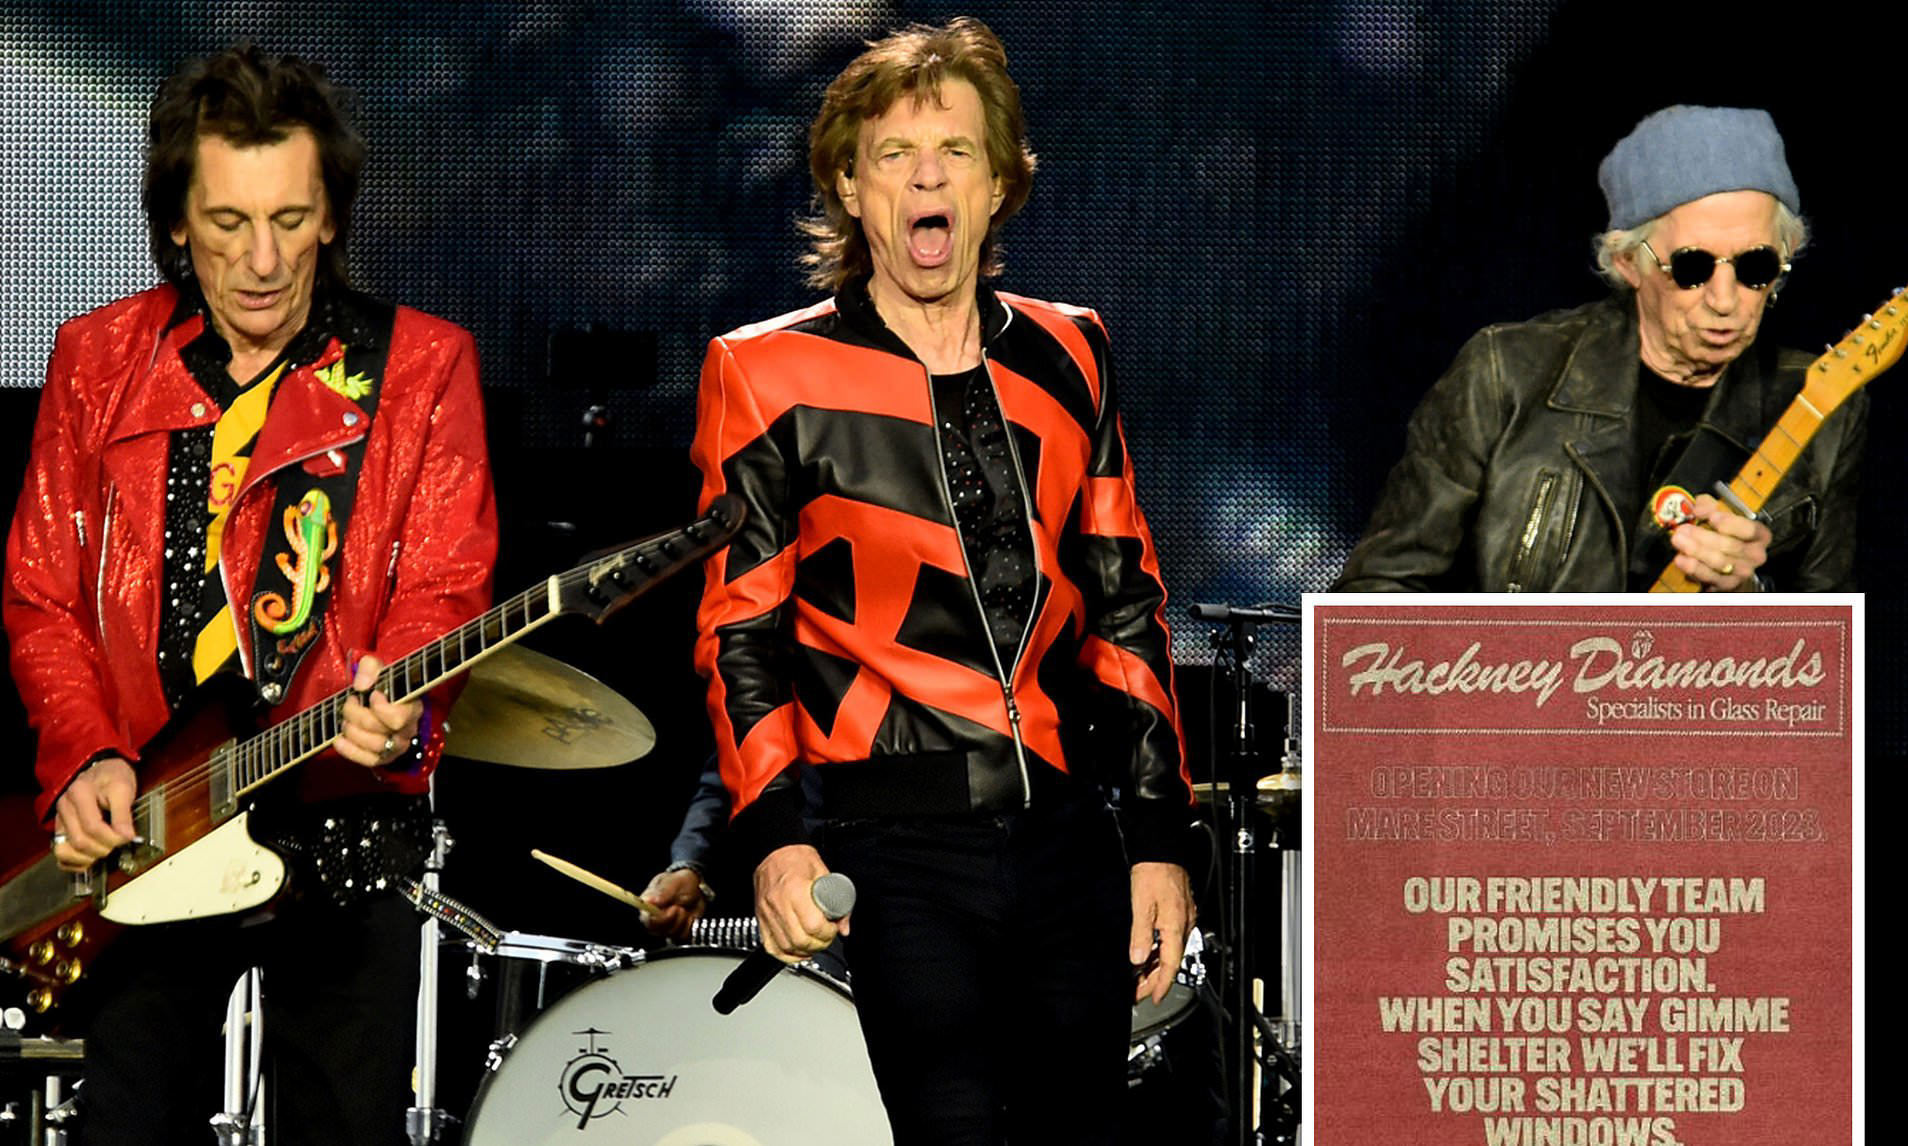 The Rolling Stones announce new album title Hackney Diamonds